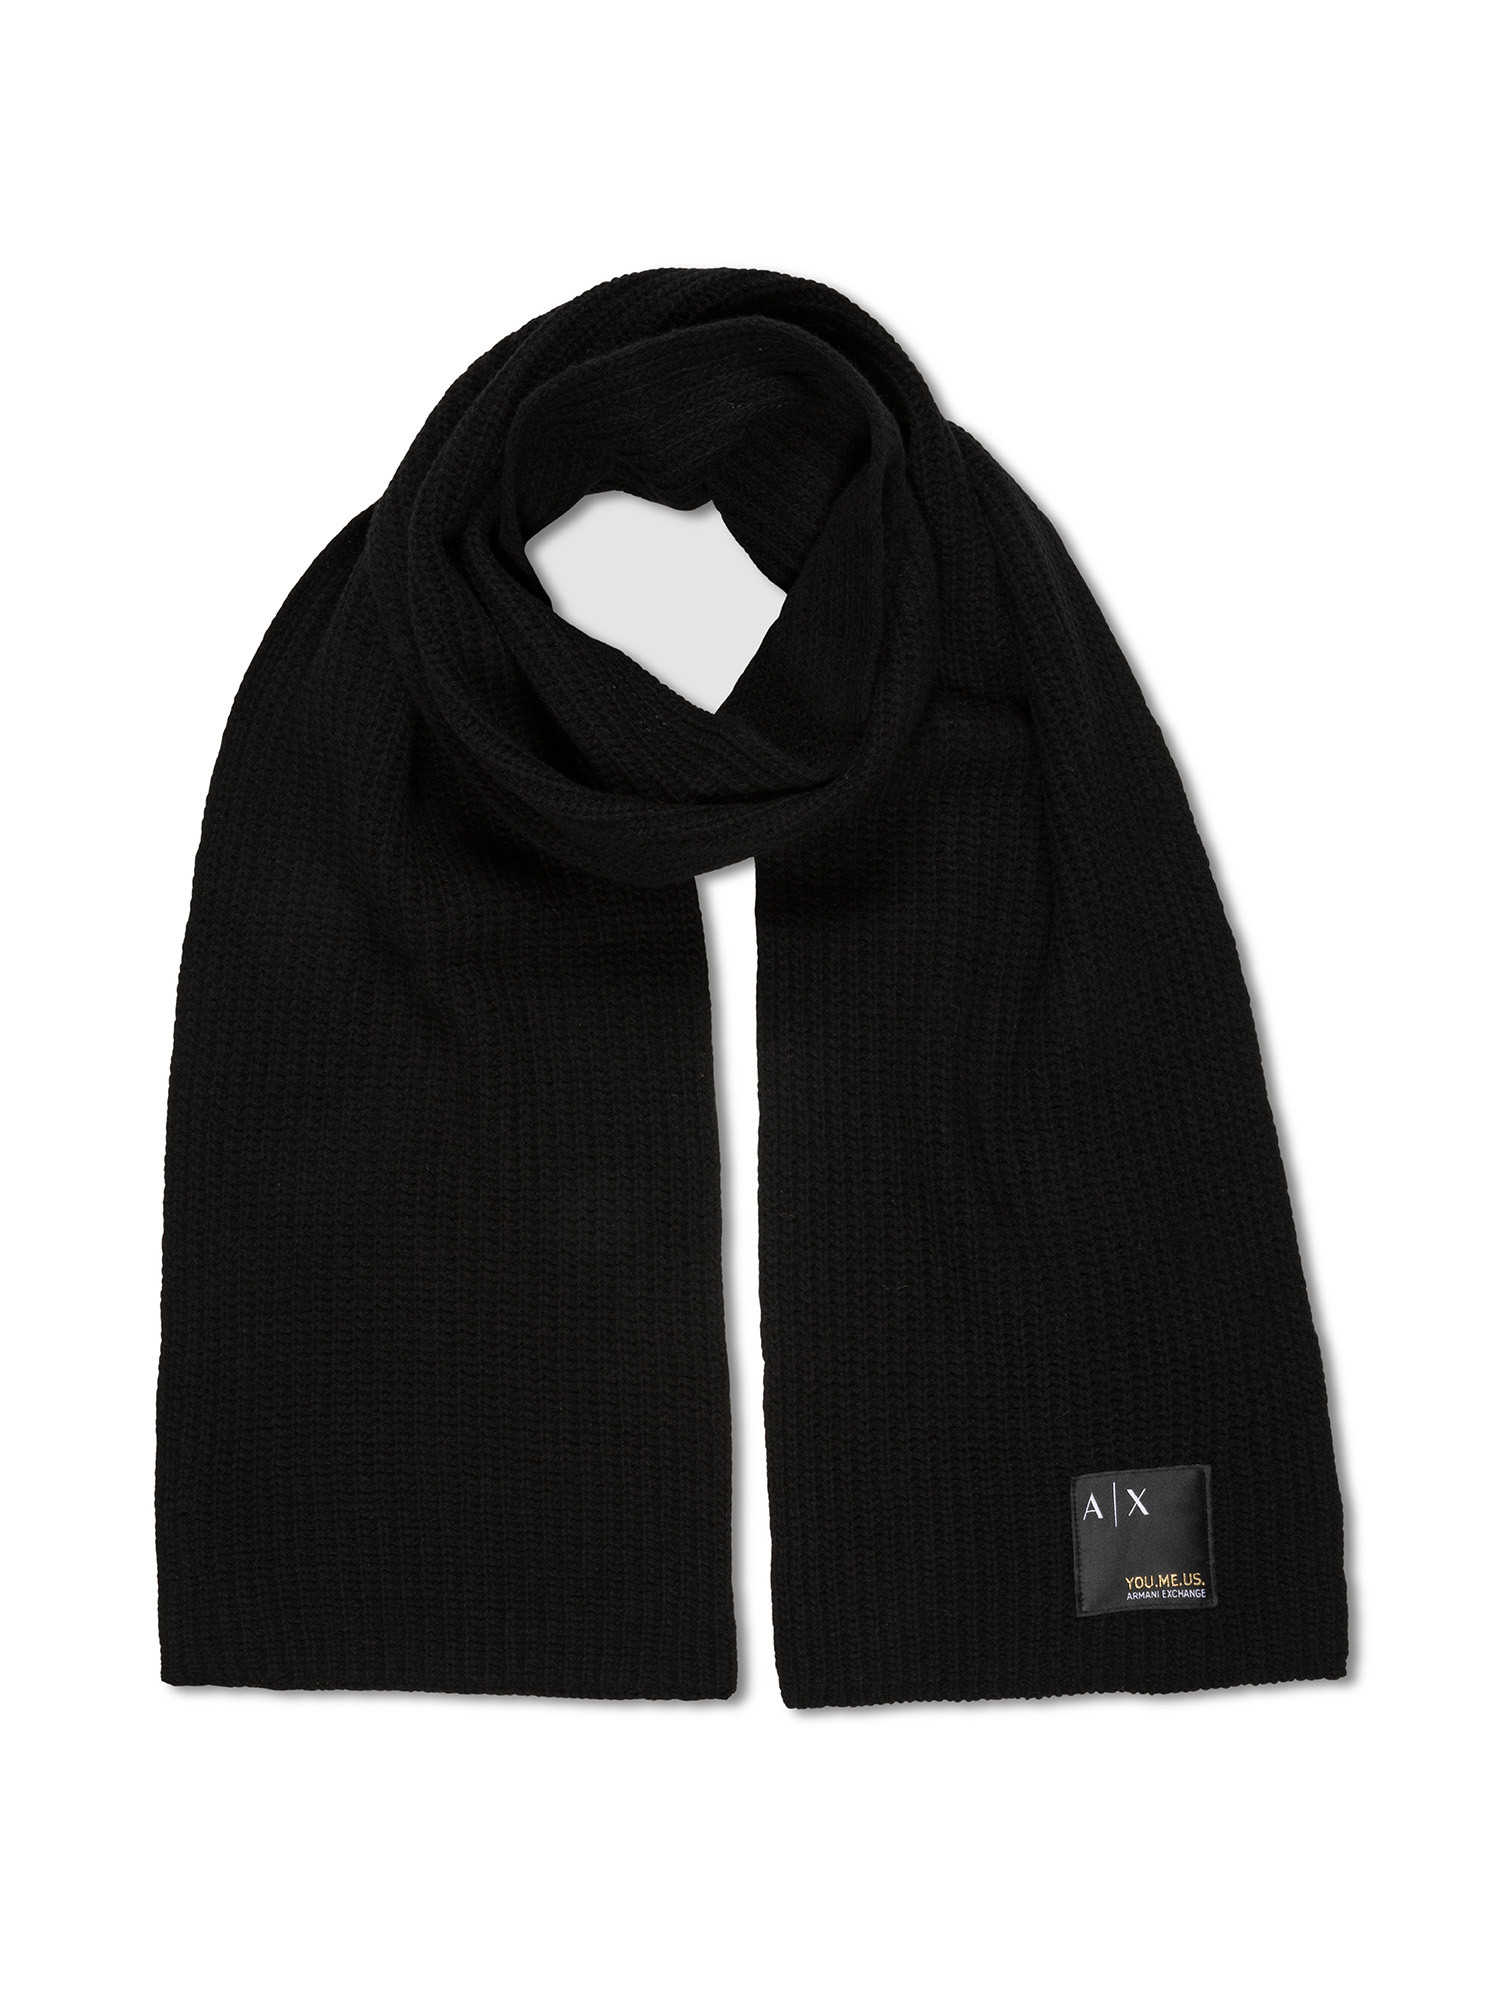 Armani Exchange - Scarf in recycled wool blend, Black, large image number 0